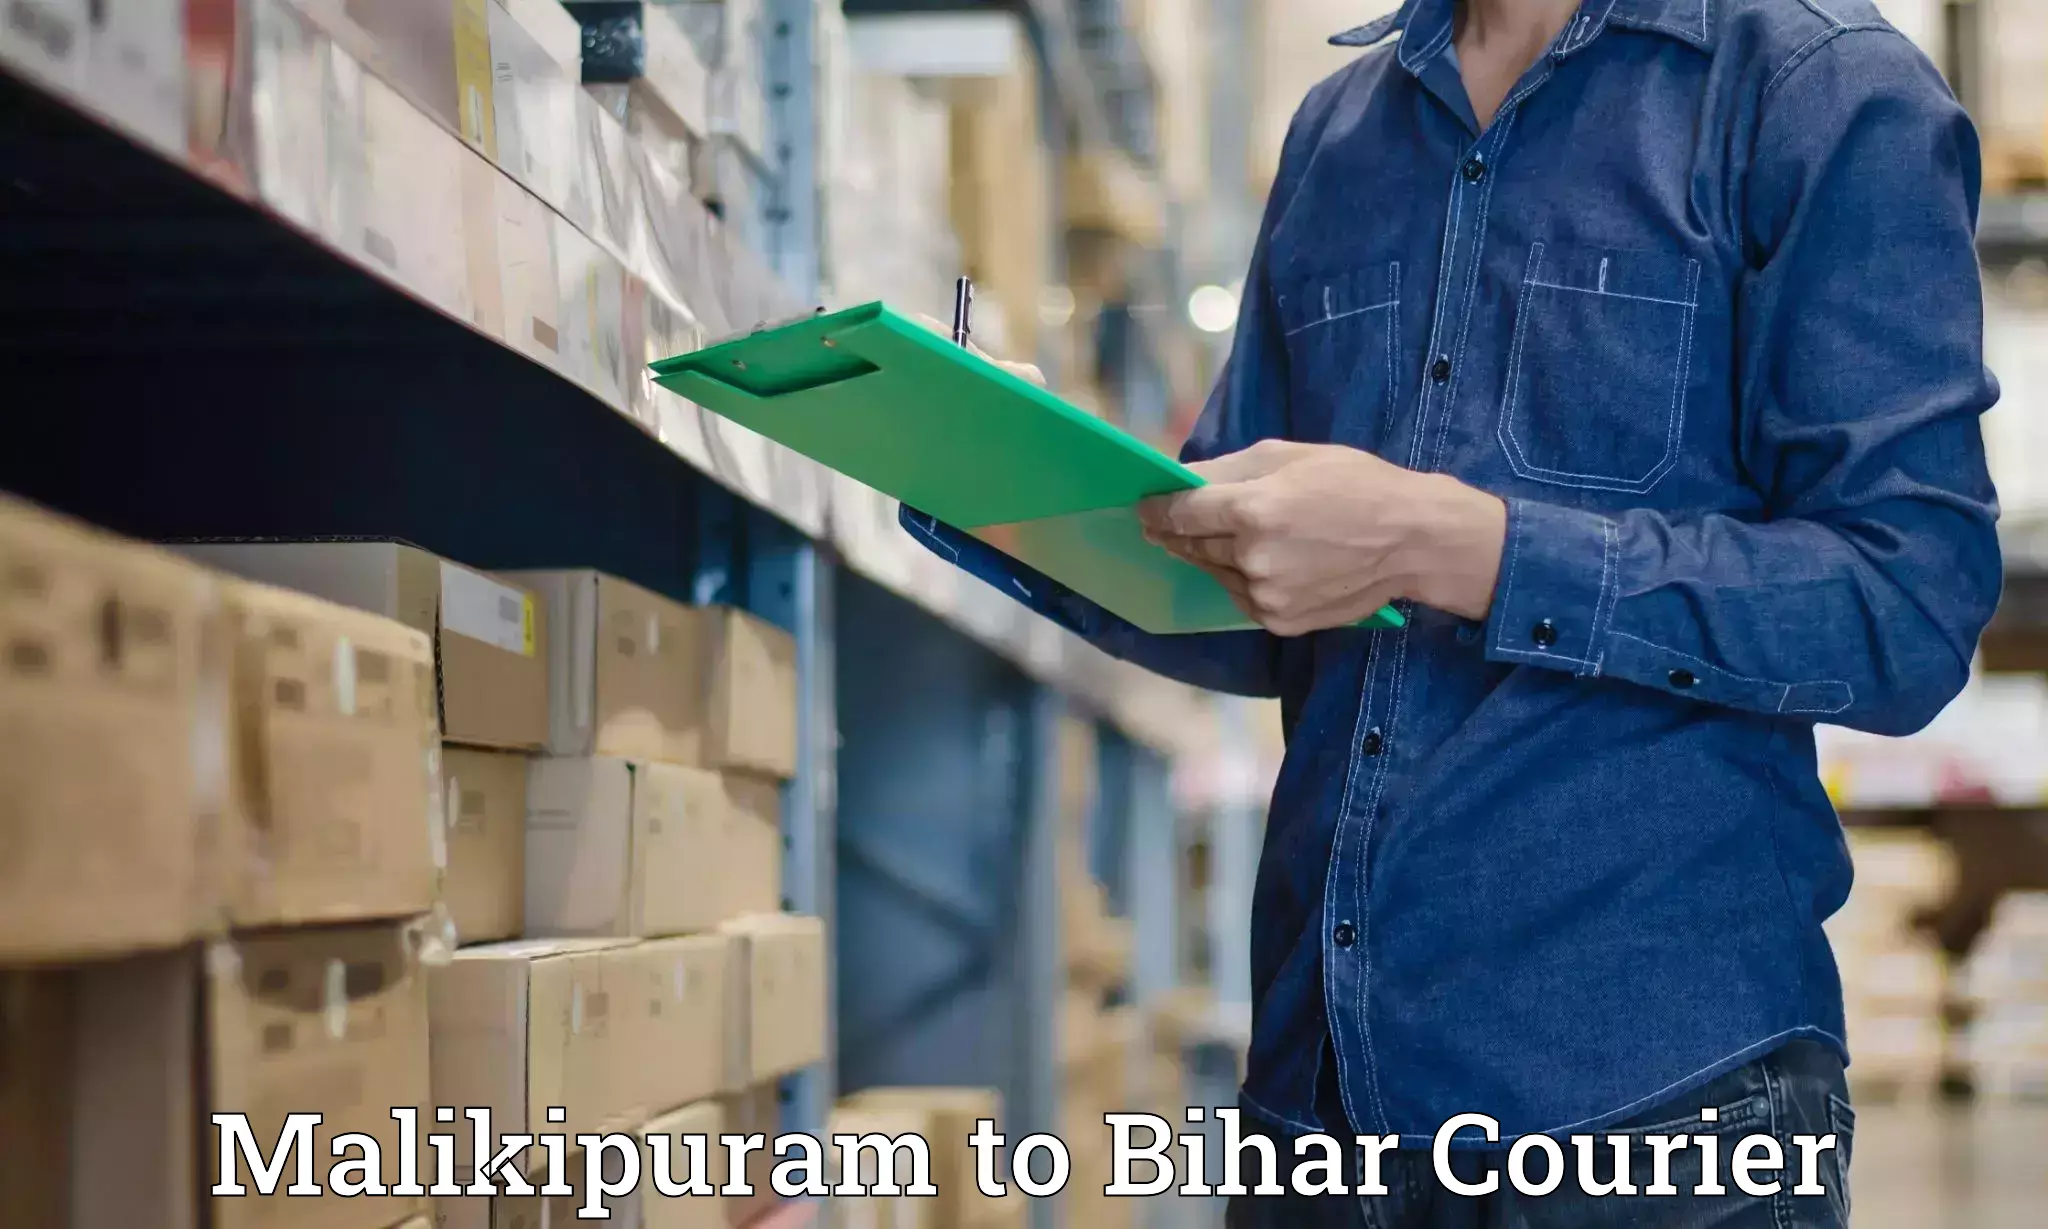 Courier tracking online in Malikipuram to Bankipore